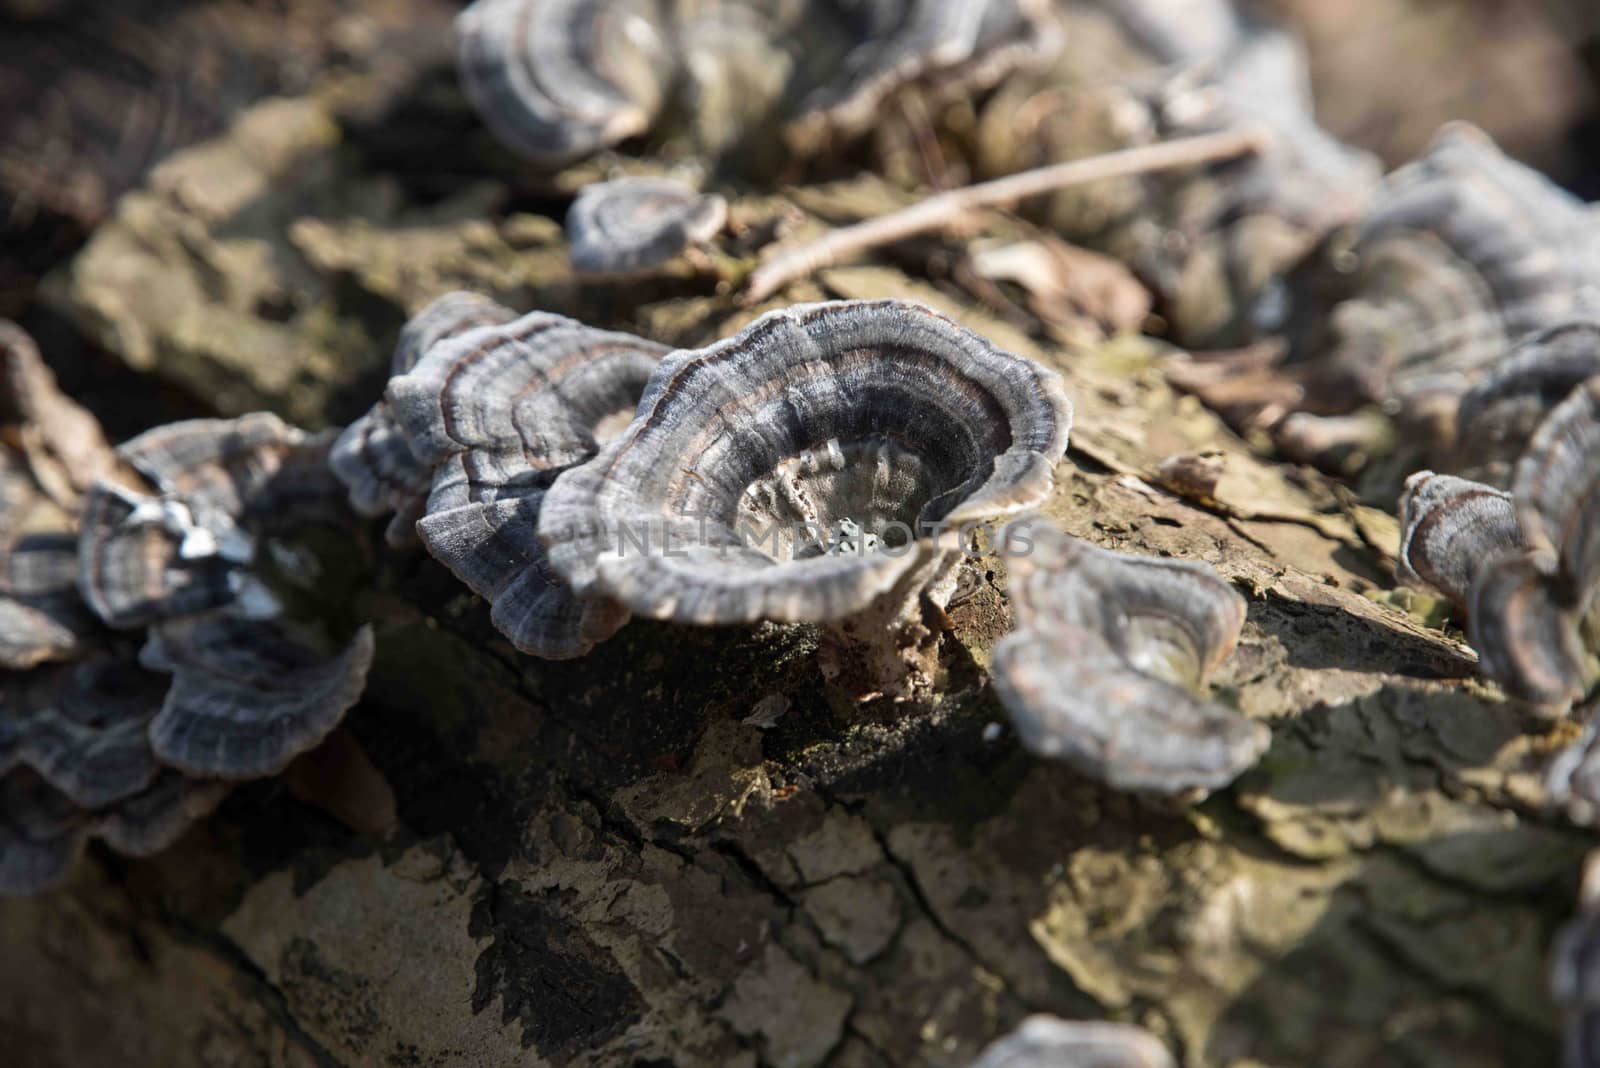 Natural mushroom pattern on the tree log in Spreng. by elina_chernikova